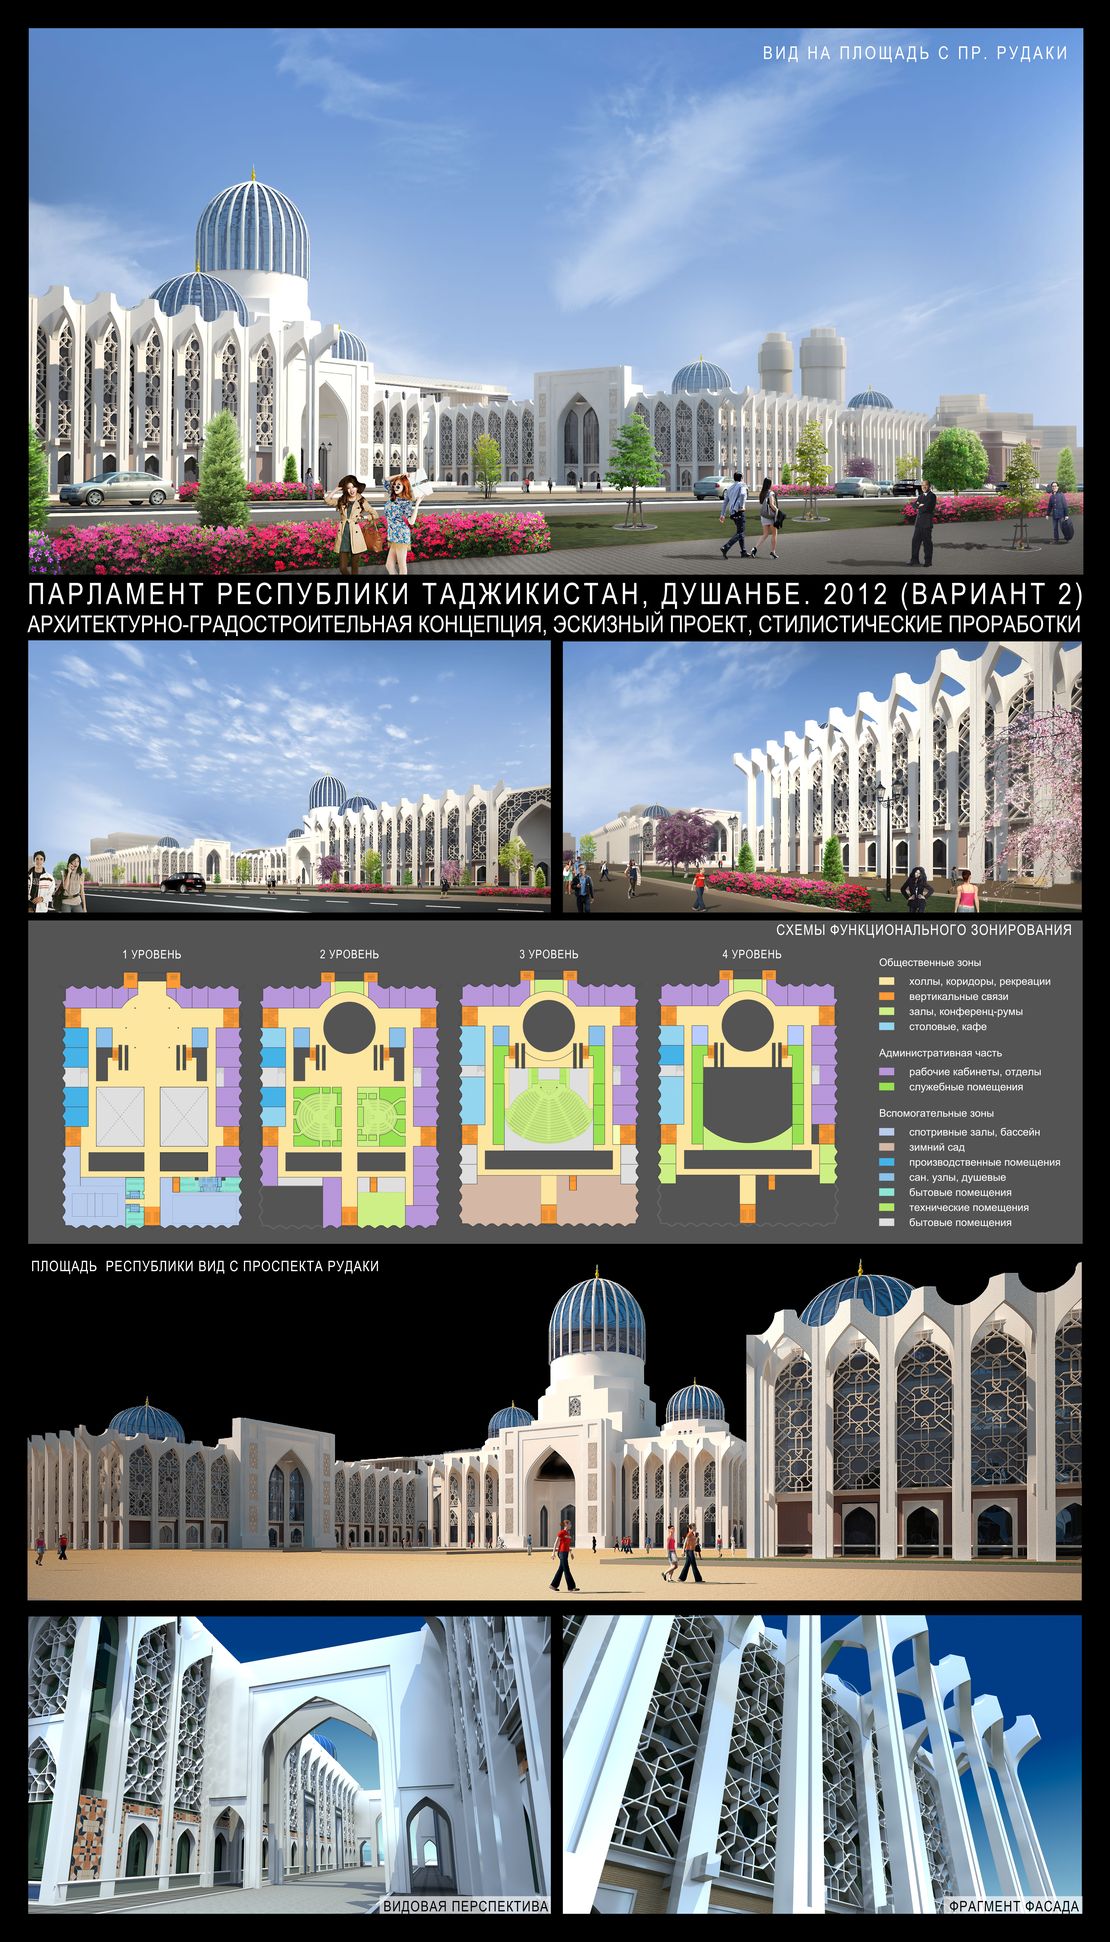 Парламент республики Таджикистан (вариант 2) - вариант 1